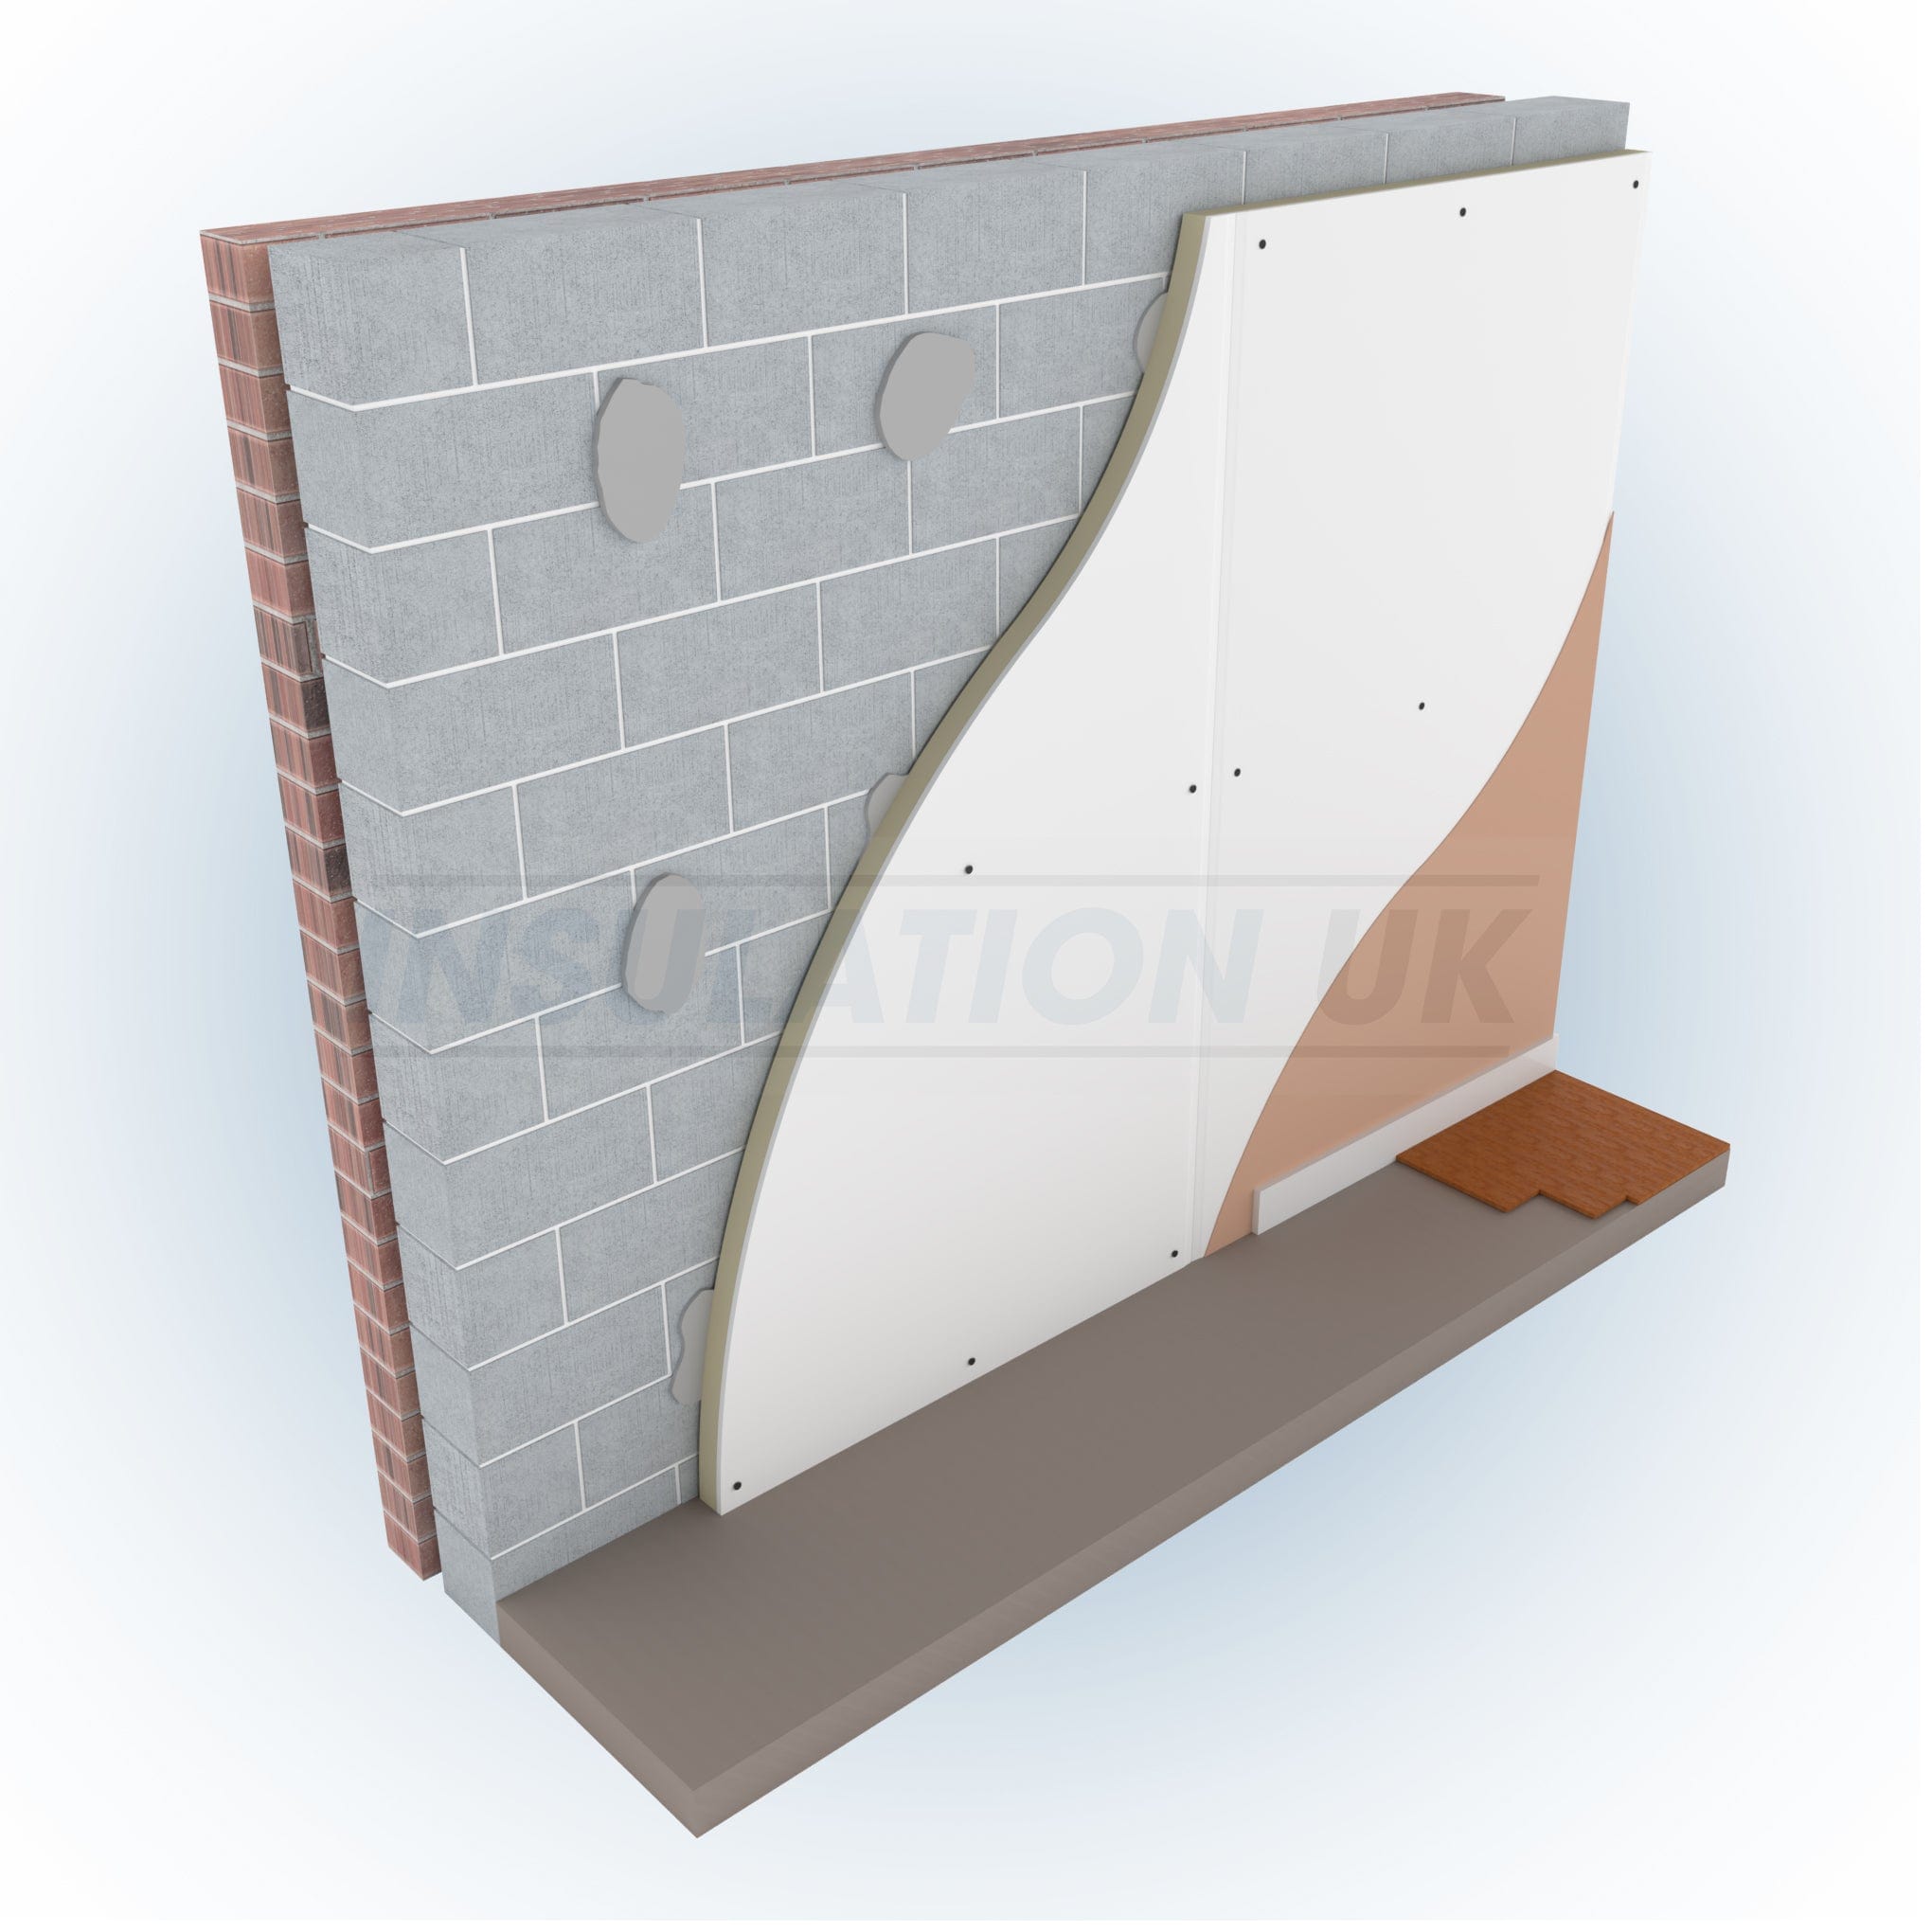 Tekwarm Insulation Tekwarm PIR Insulated Plasterboard | 2400 x 1200mm Tekwarm PIR Insulated Plasterboard - Thermal Laminate 2400mm x 1200mm